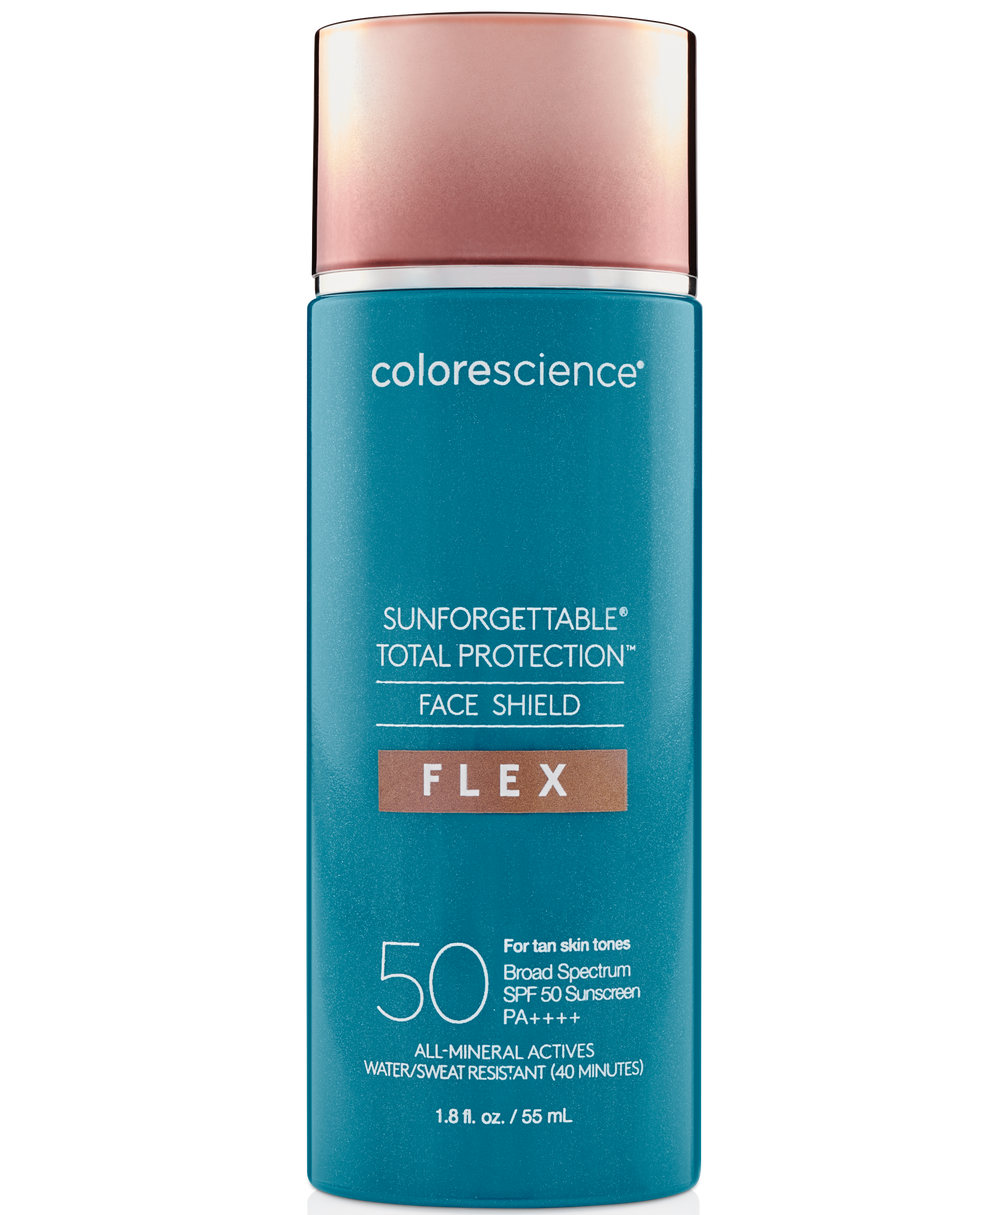 colorscience Sunforgettable Face Shield Flex sunscreen for tan skin tones